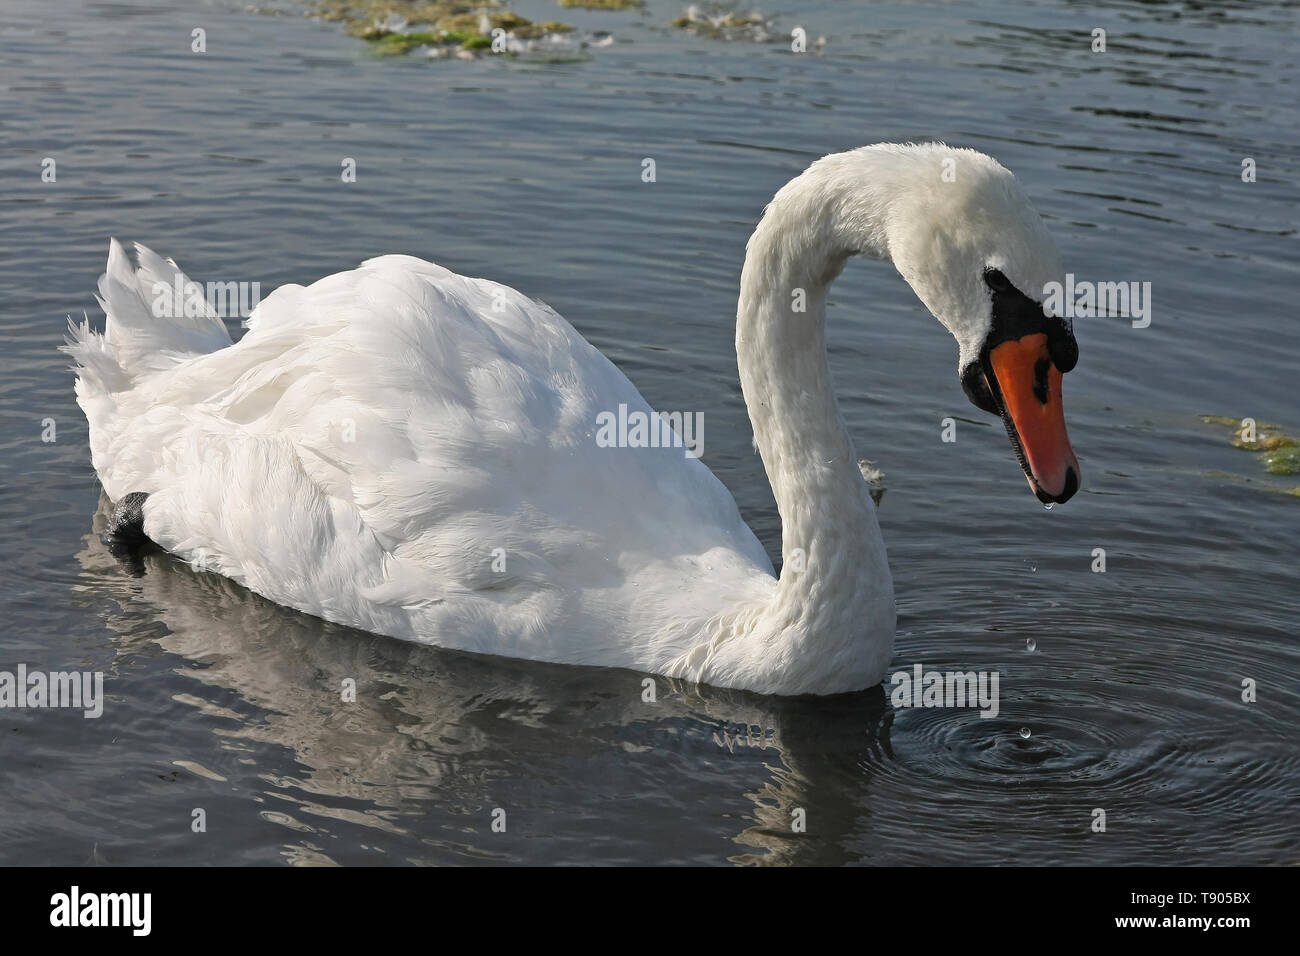 One White Swan Swimm in Lake Water Stock Photo